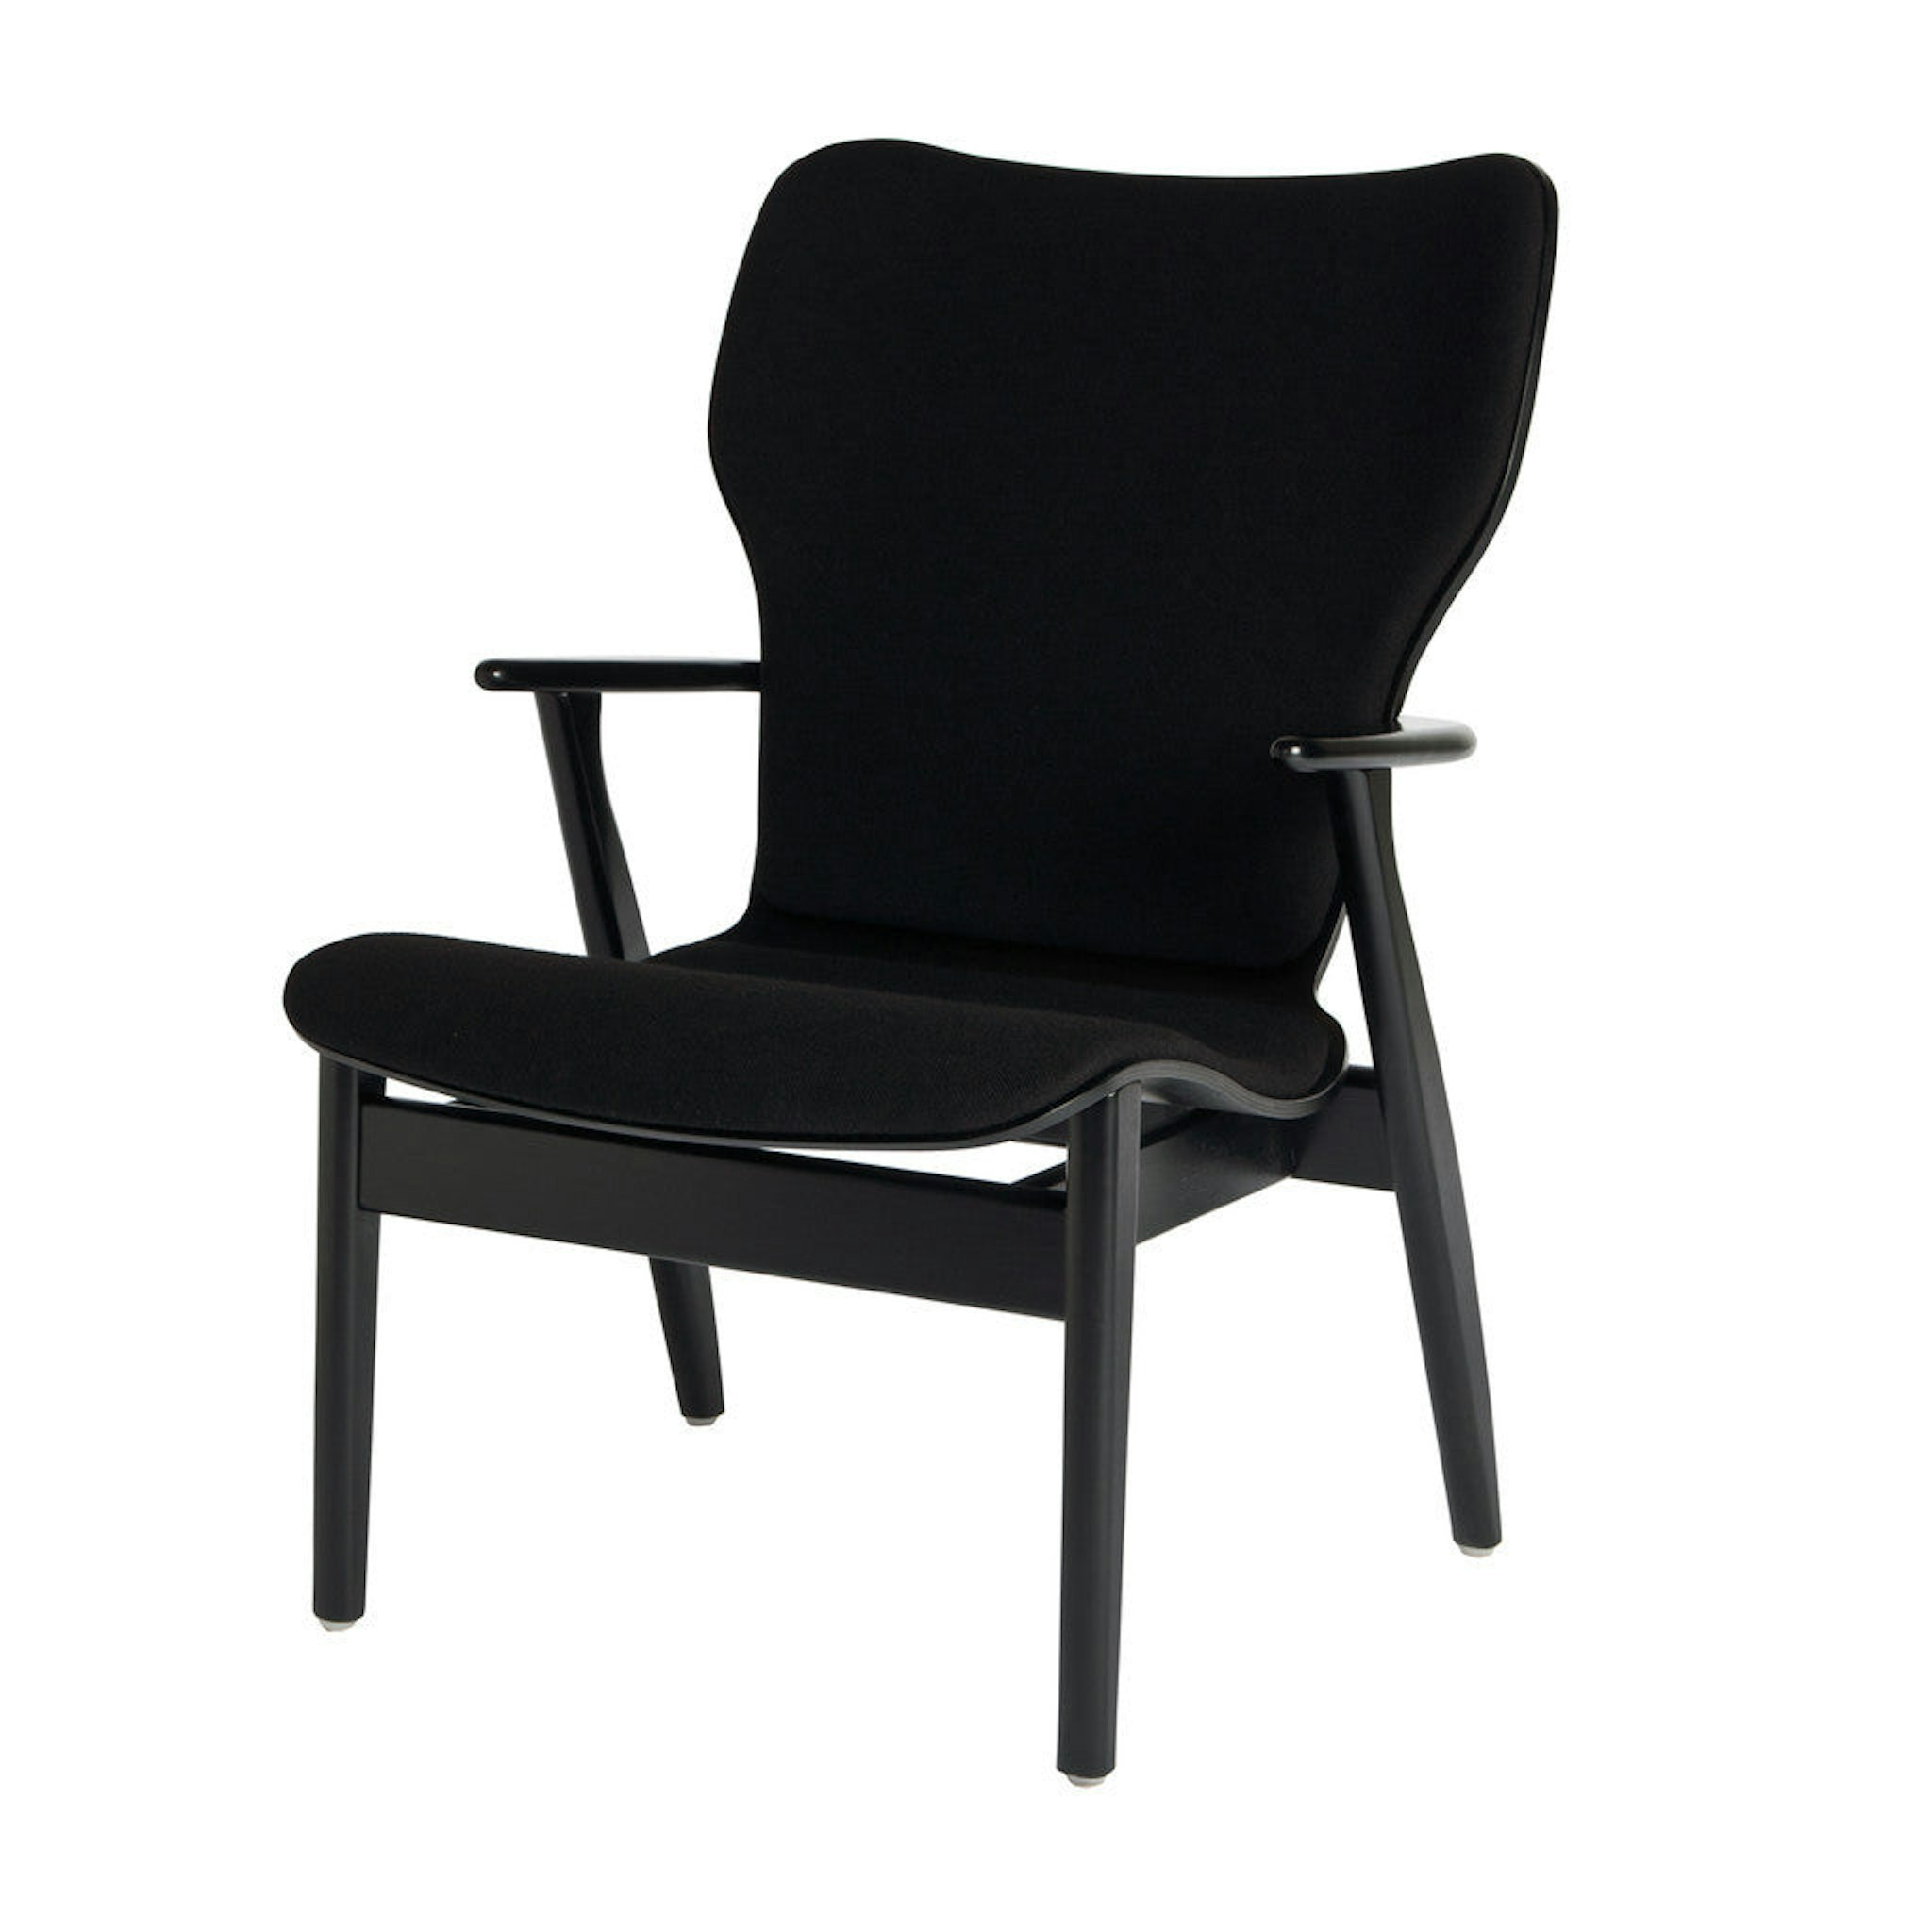 Domus Lounge Chair by Artek